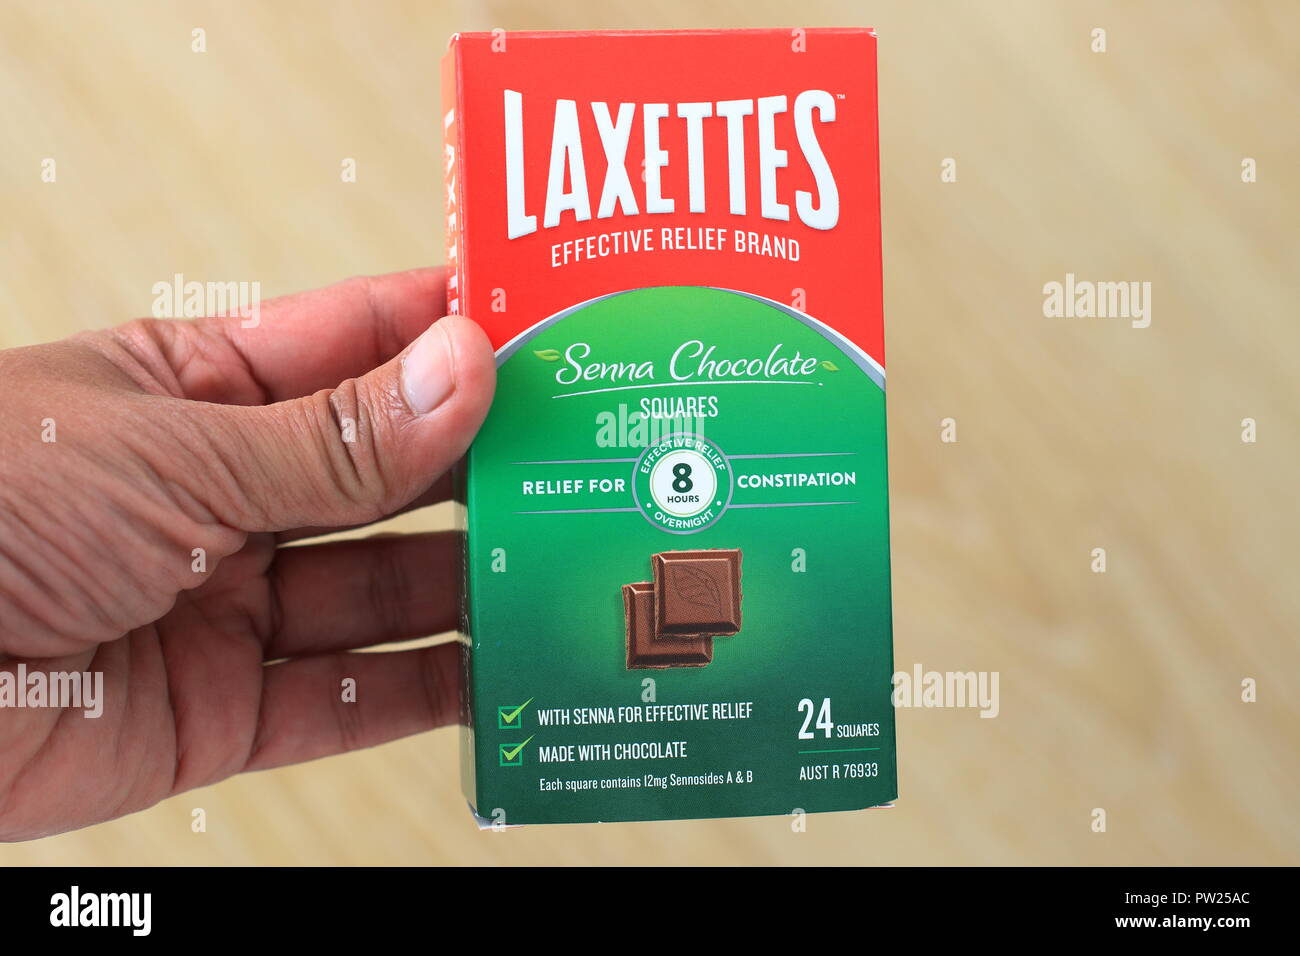 Laxettes Senna Chocolate squares Stock Photo